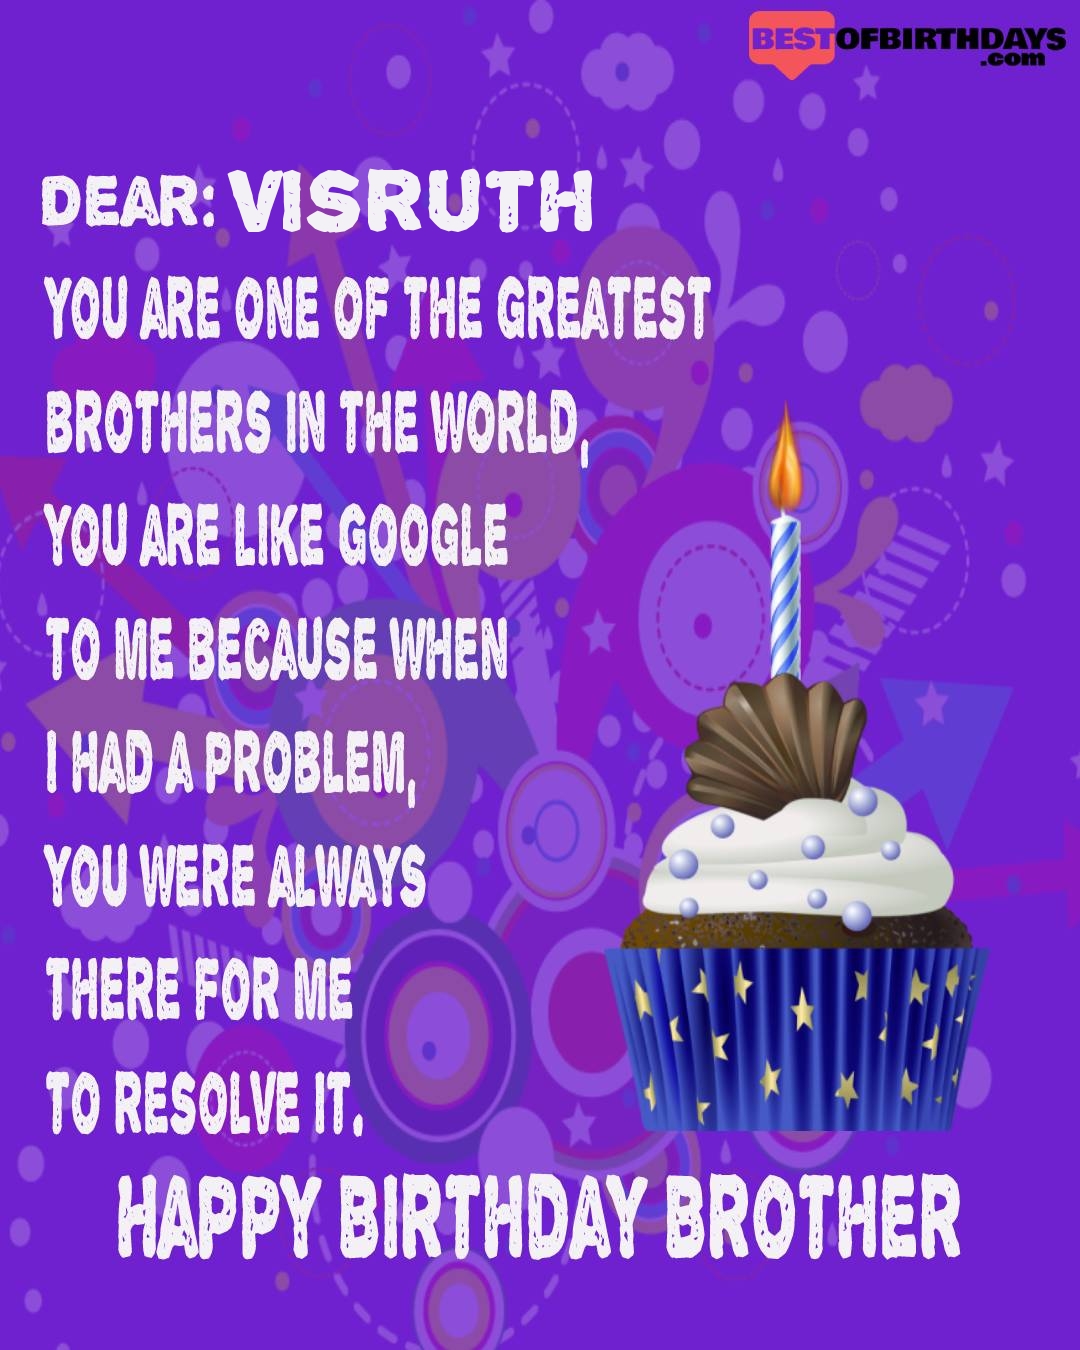 Happy birthday visruth bhai brother bro